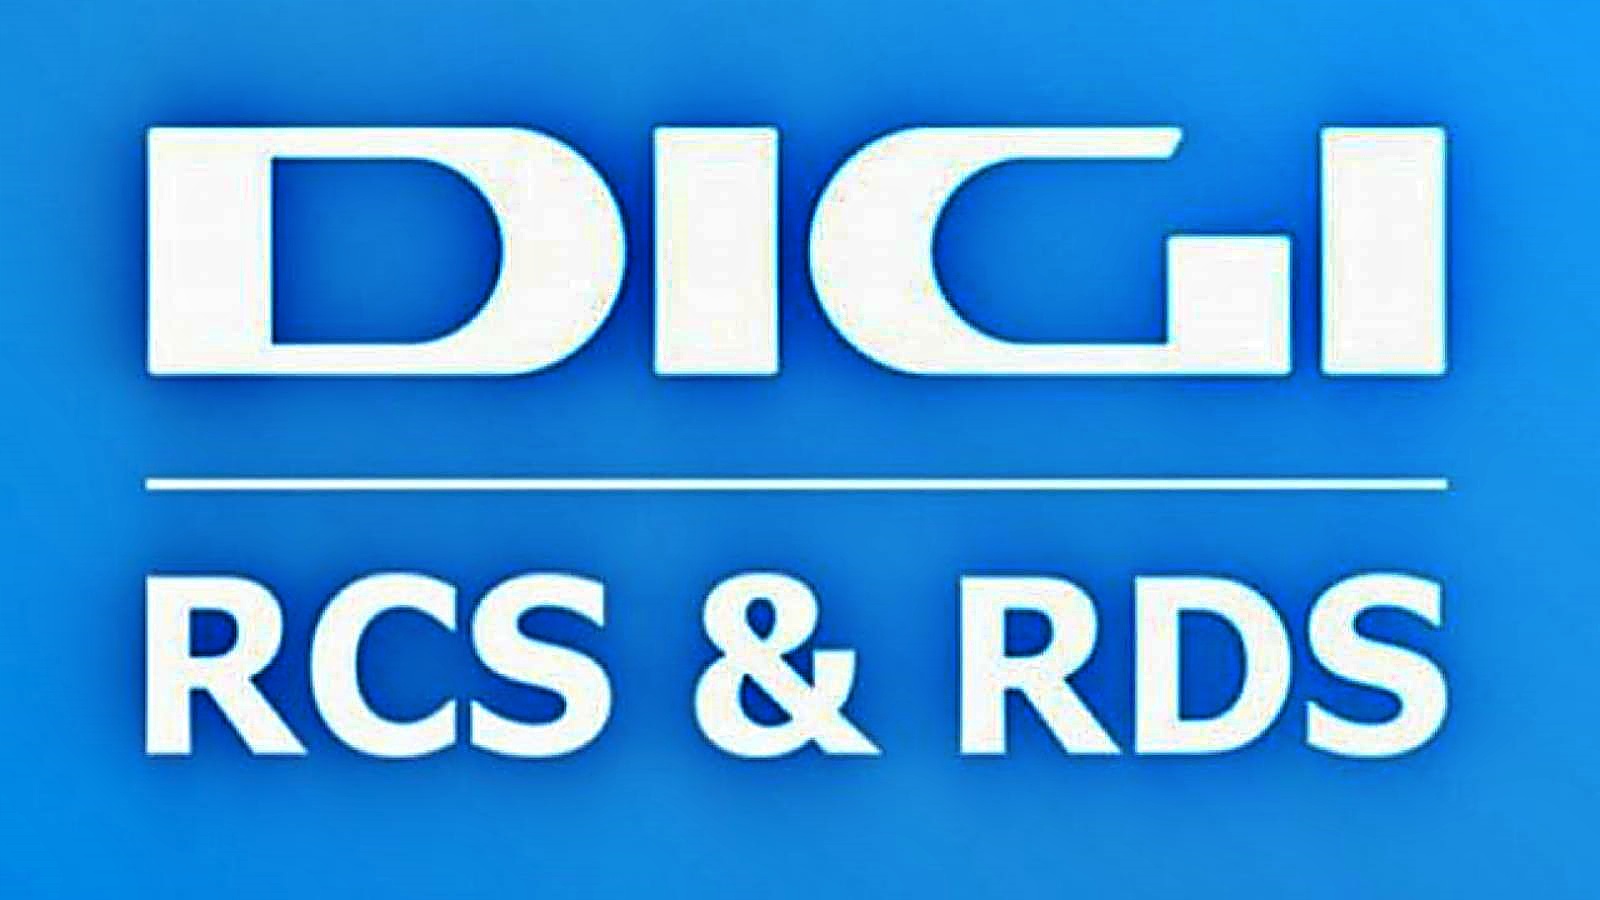 DIGI RCS & RDS messen MILLIONEN Kunden in ganz Rumänien